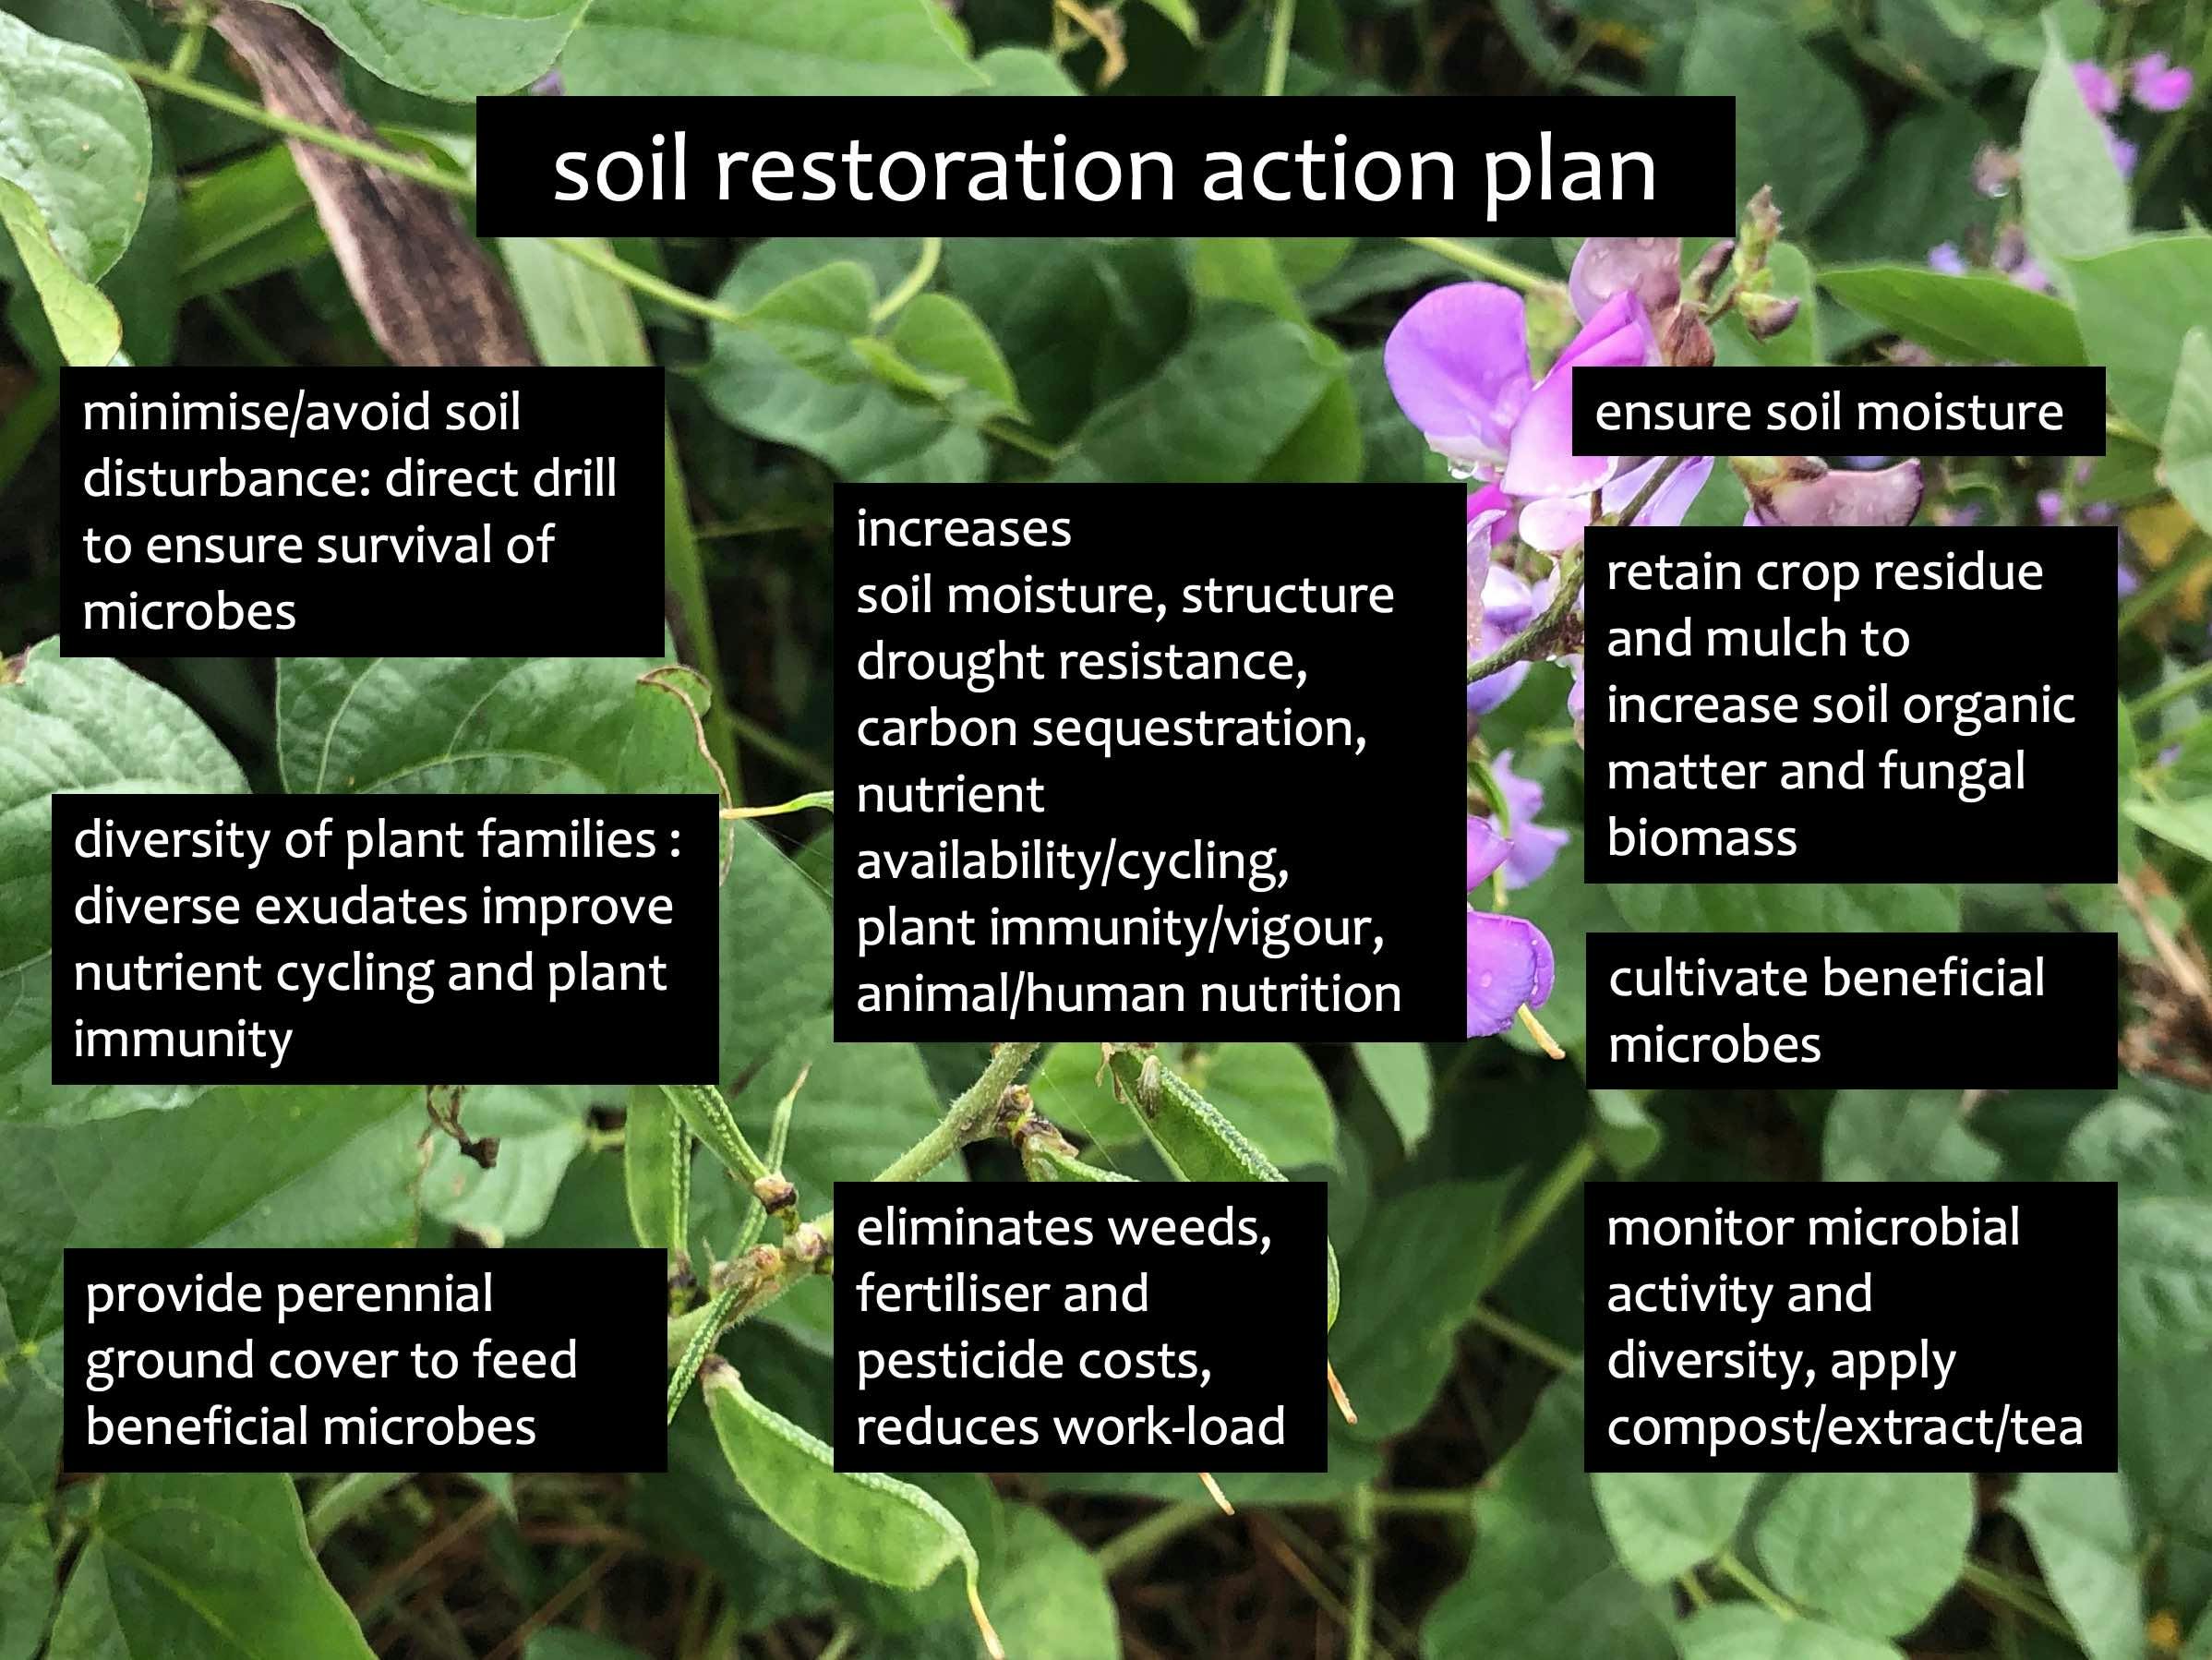 soil restoration action plan-400kb.jpg